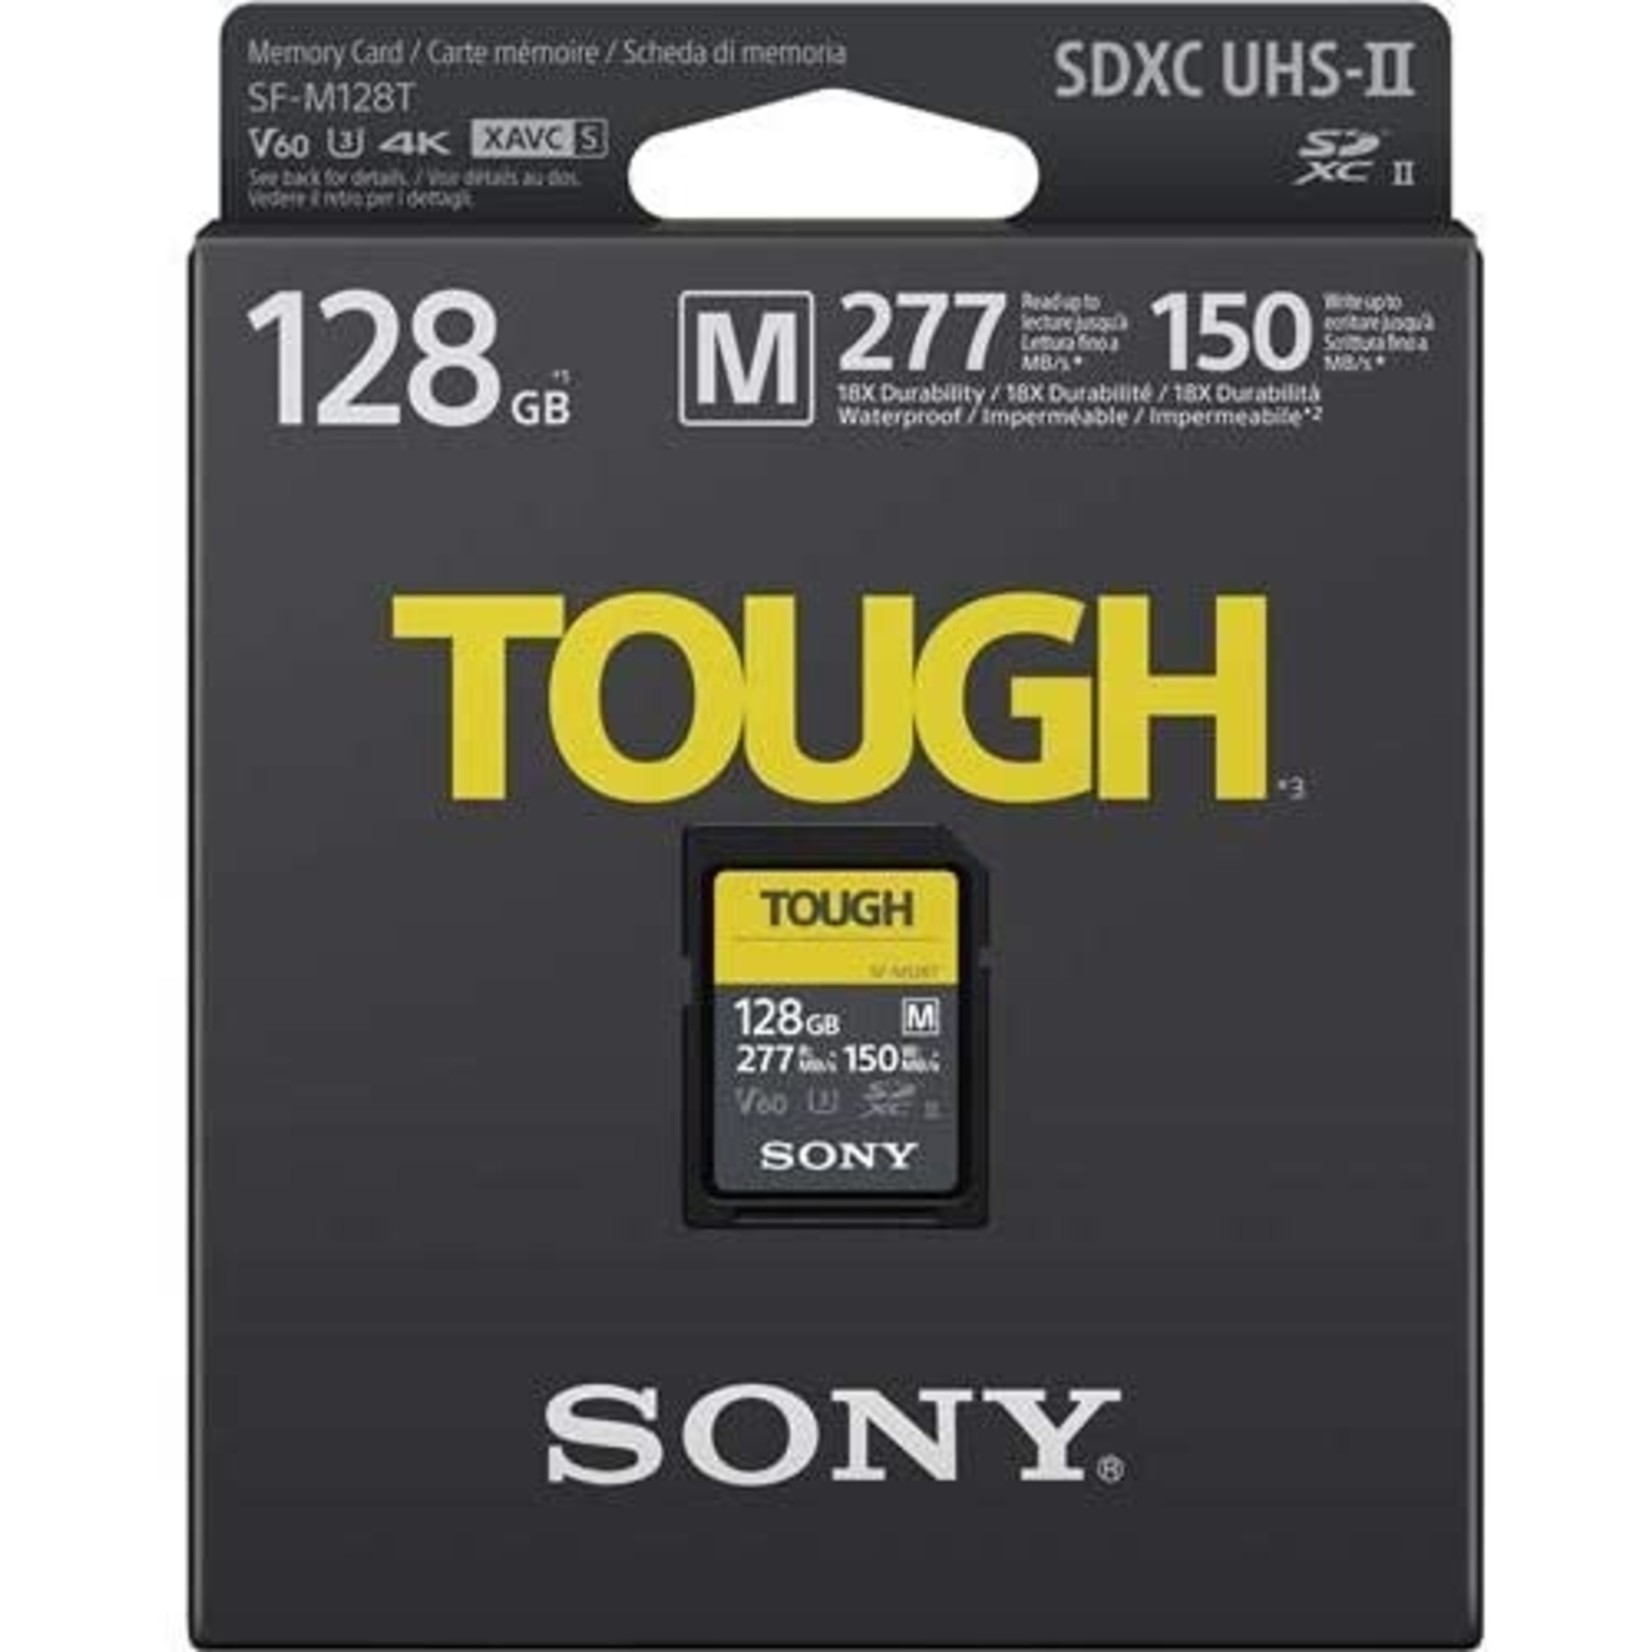 SONY 128GB UHS-II SD CARD MAX R 277MB W150MB